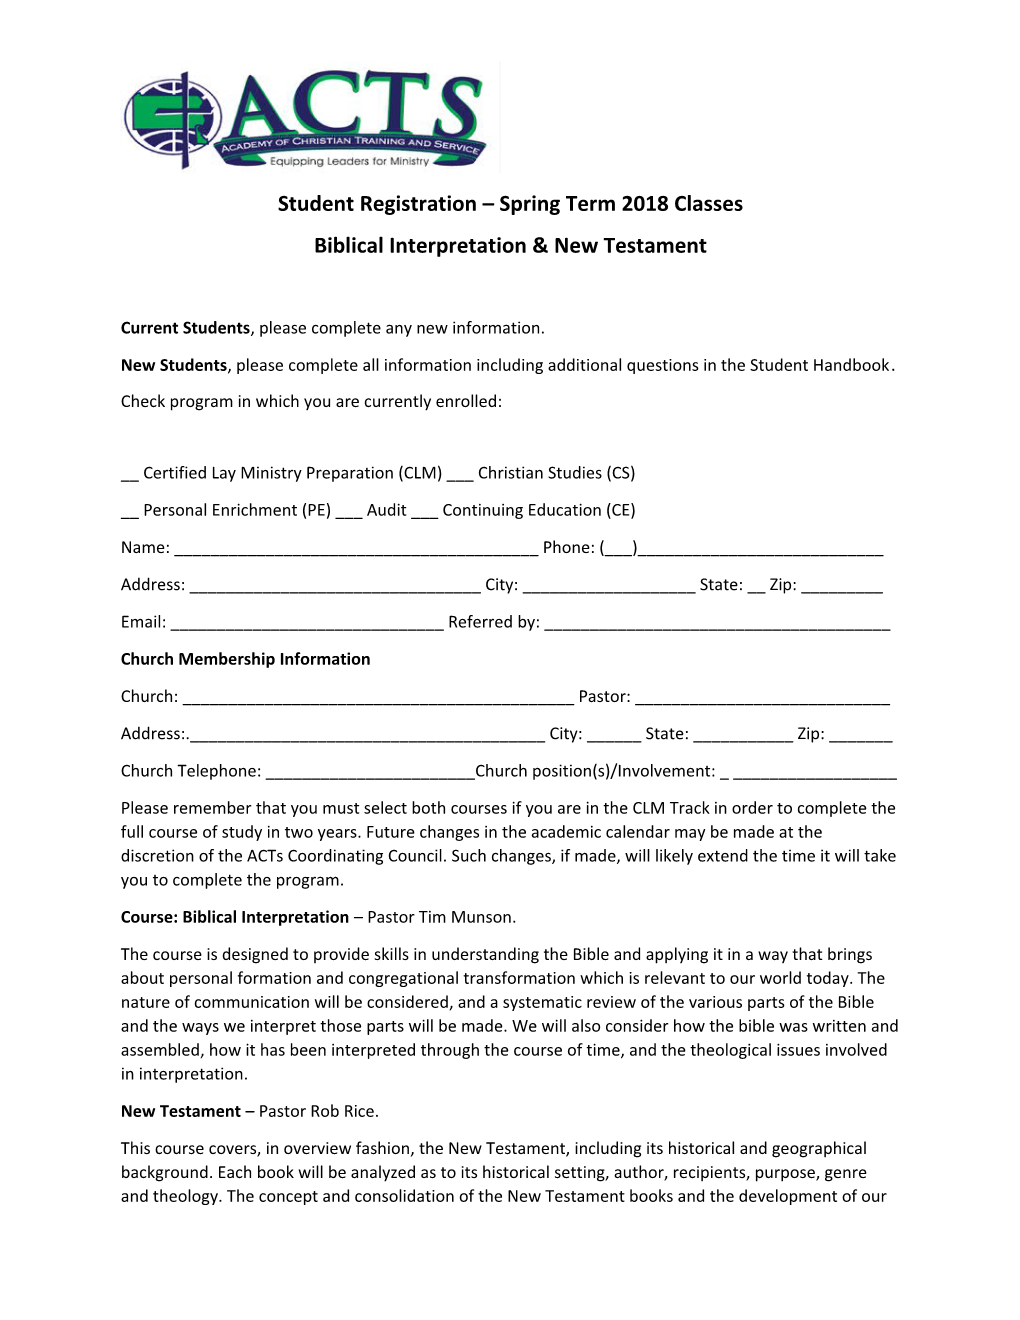 Student Registration Spring Term 2018 Classes